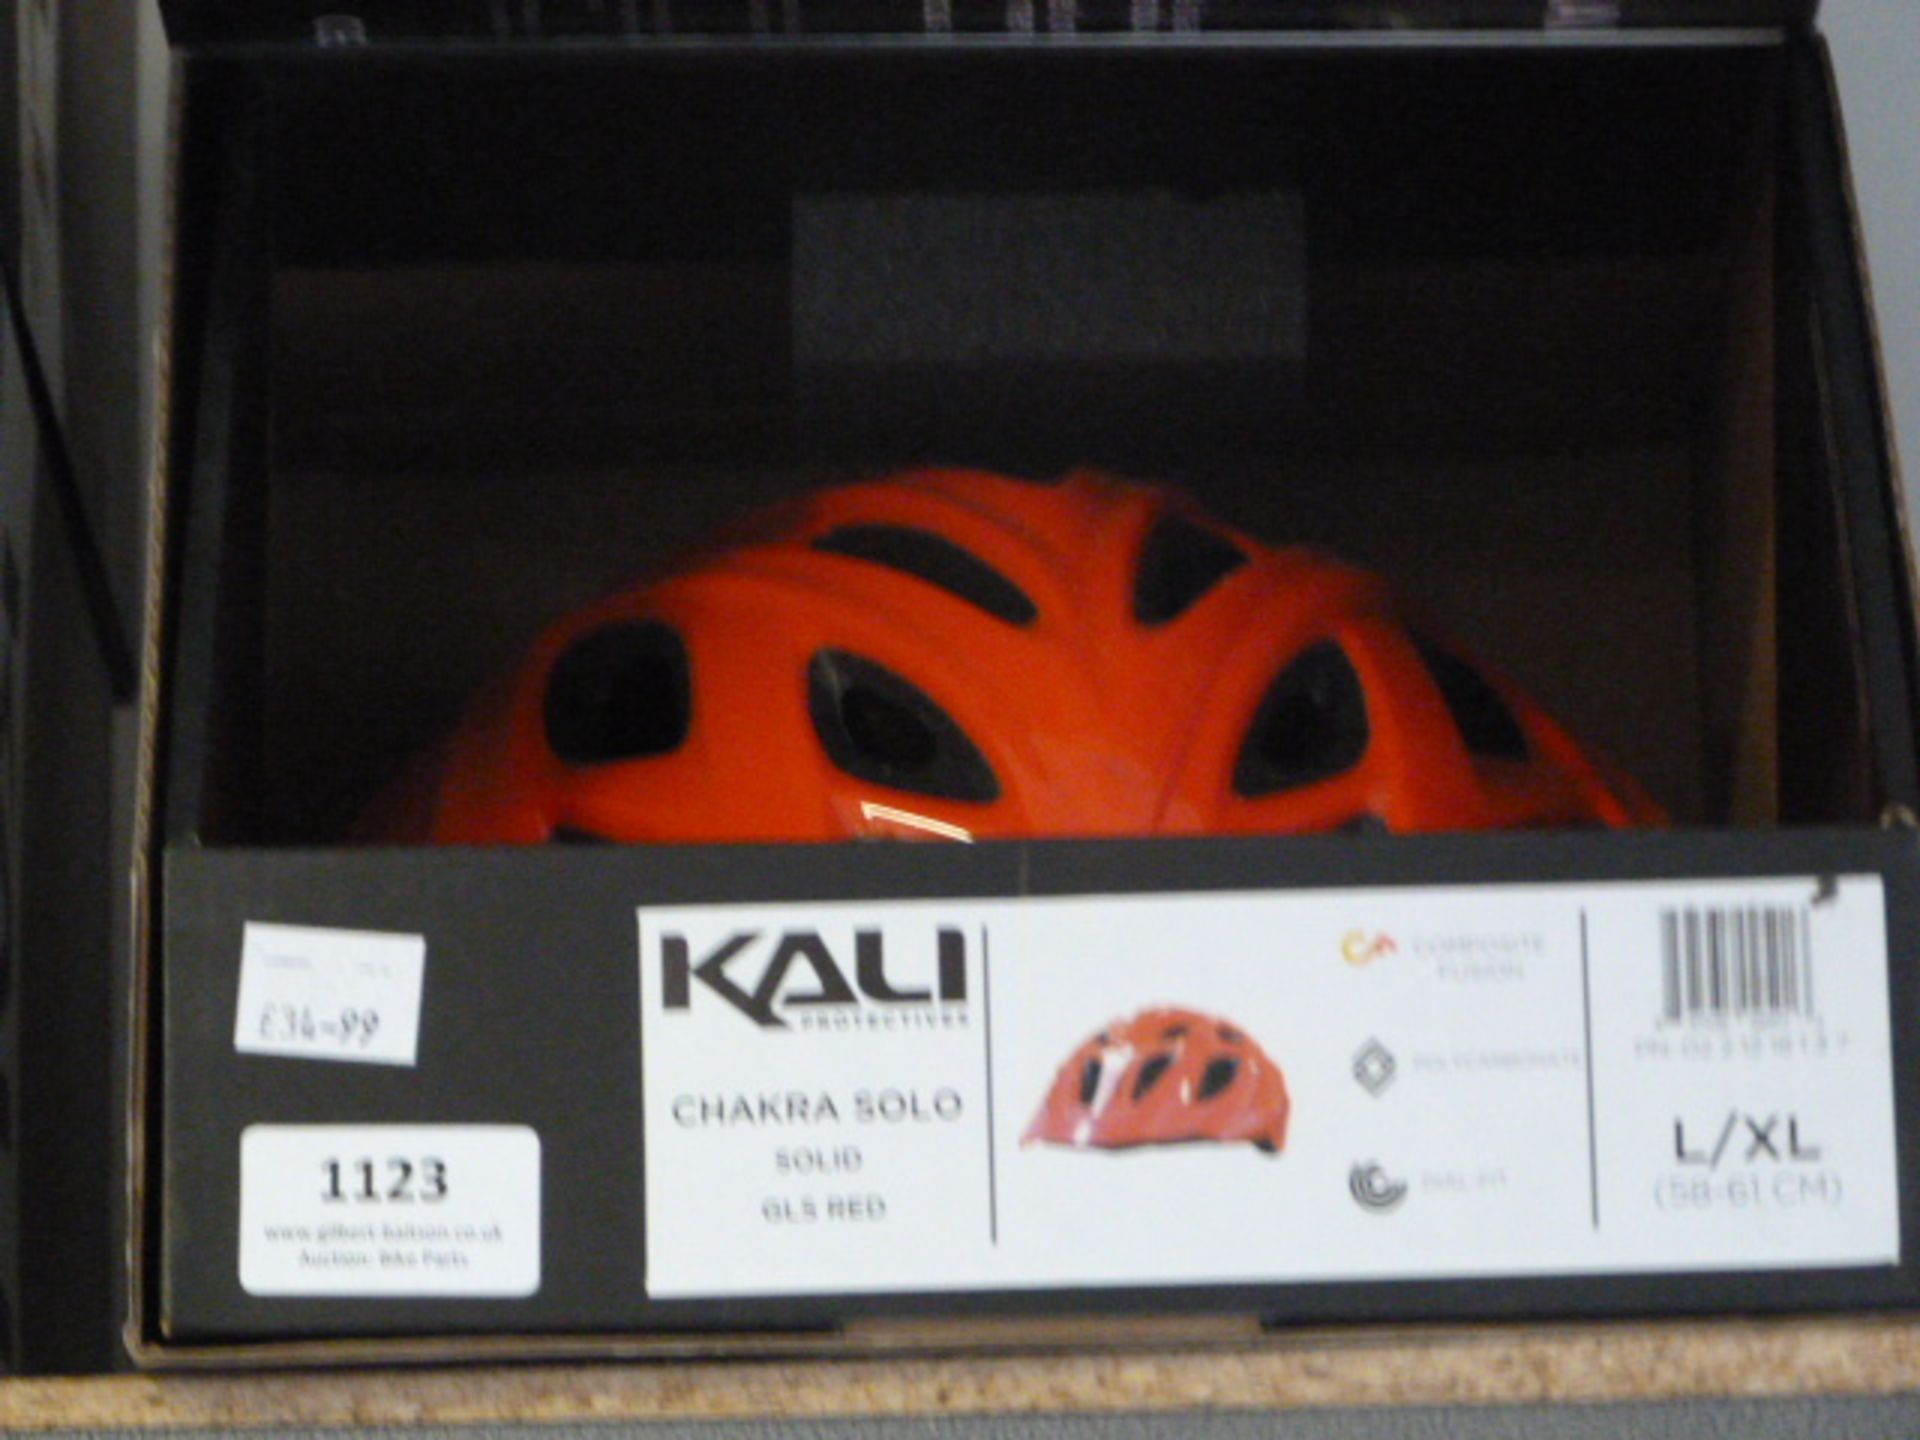 *Kali Chakra Solo Solid Bicycle Helmet Size: L/XL